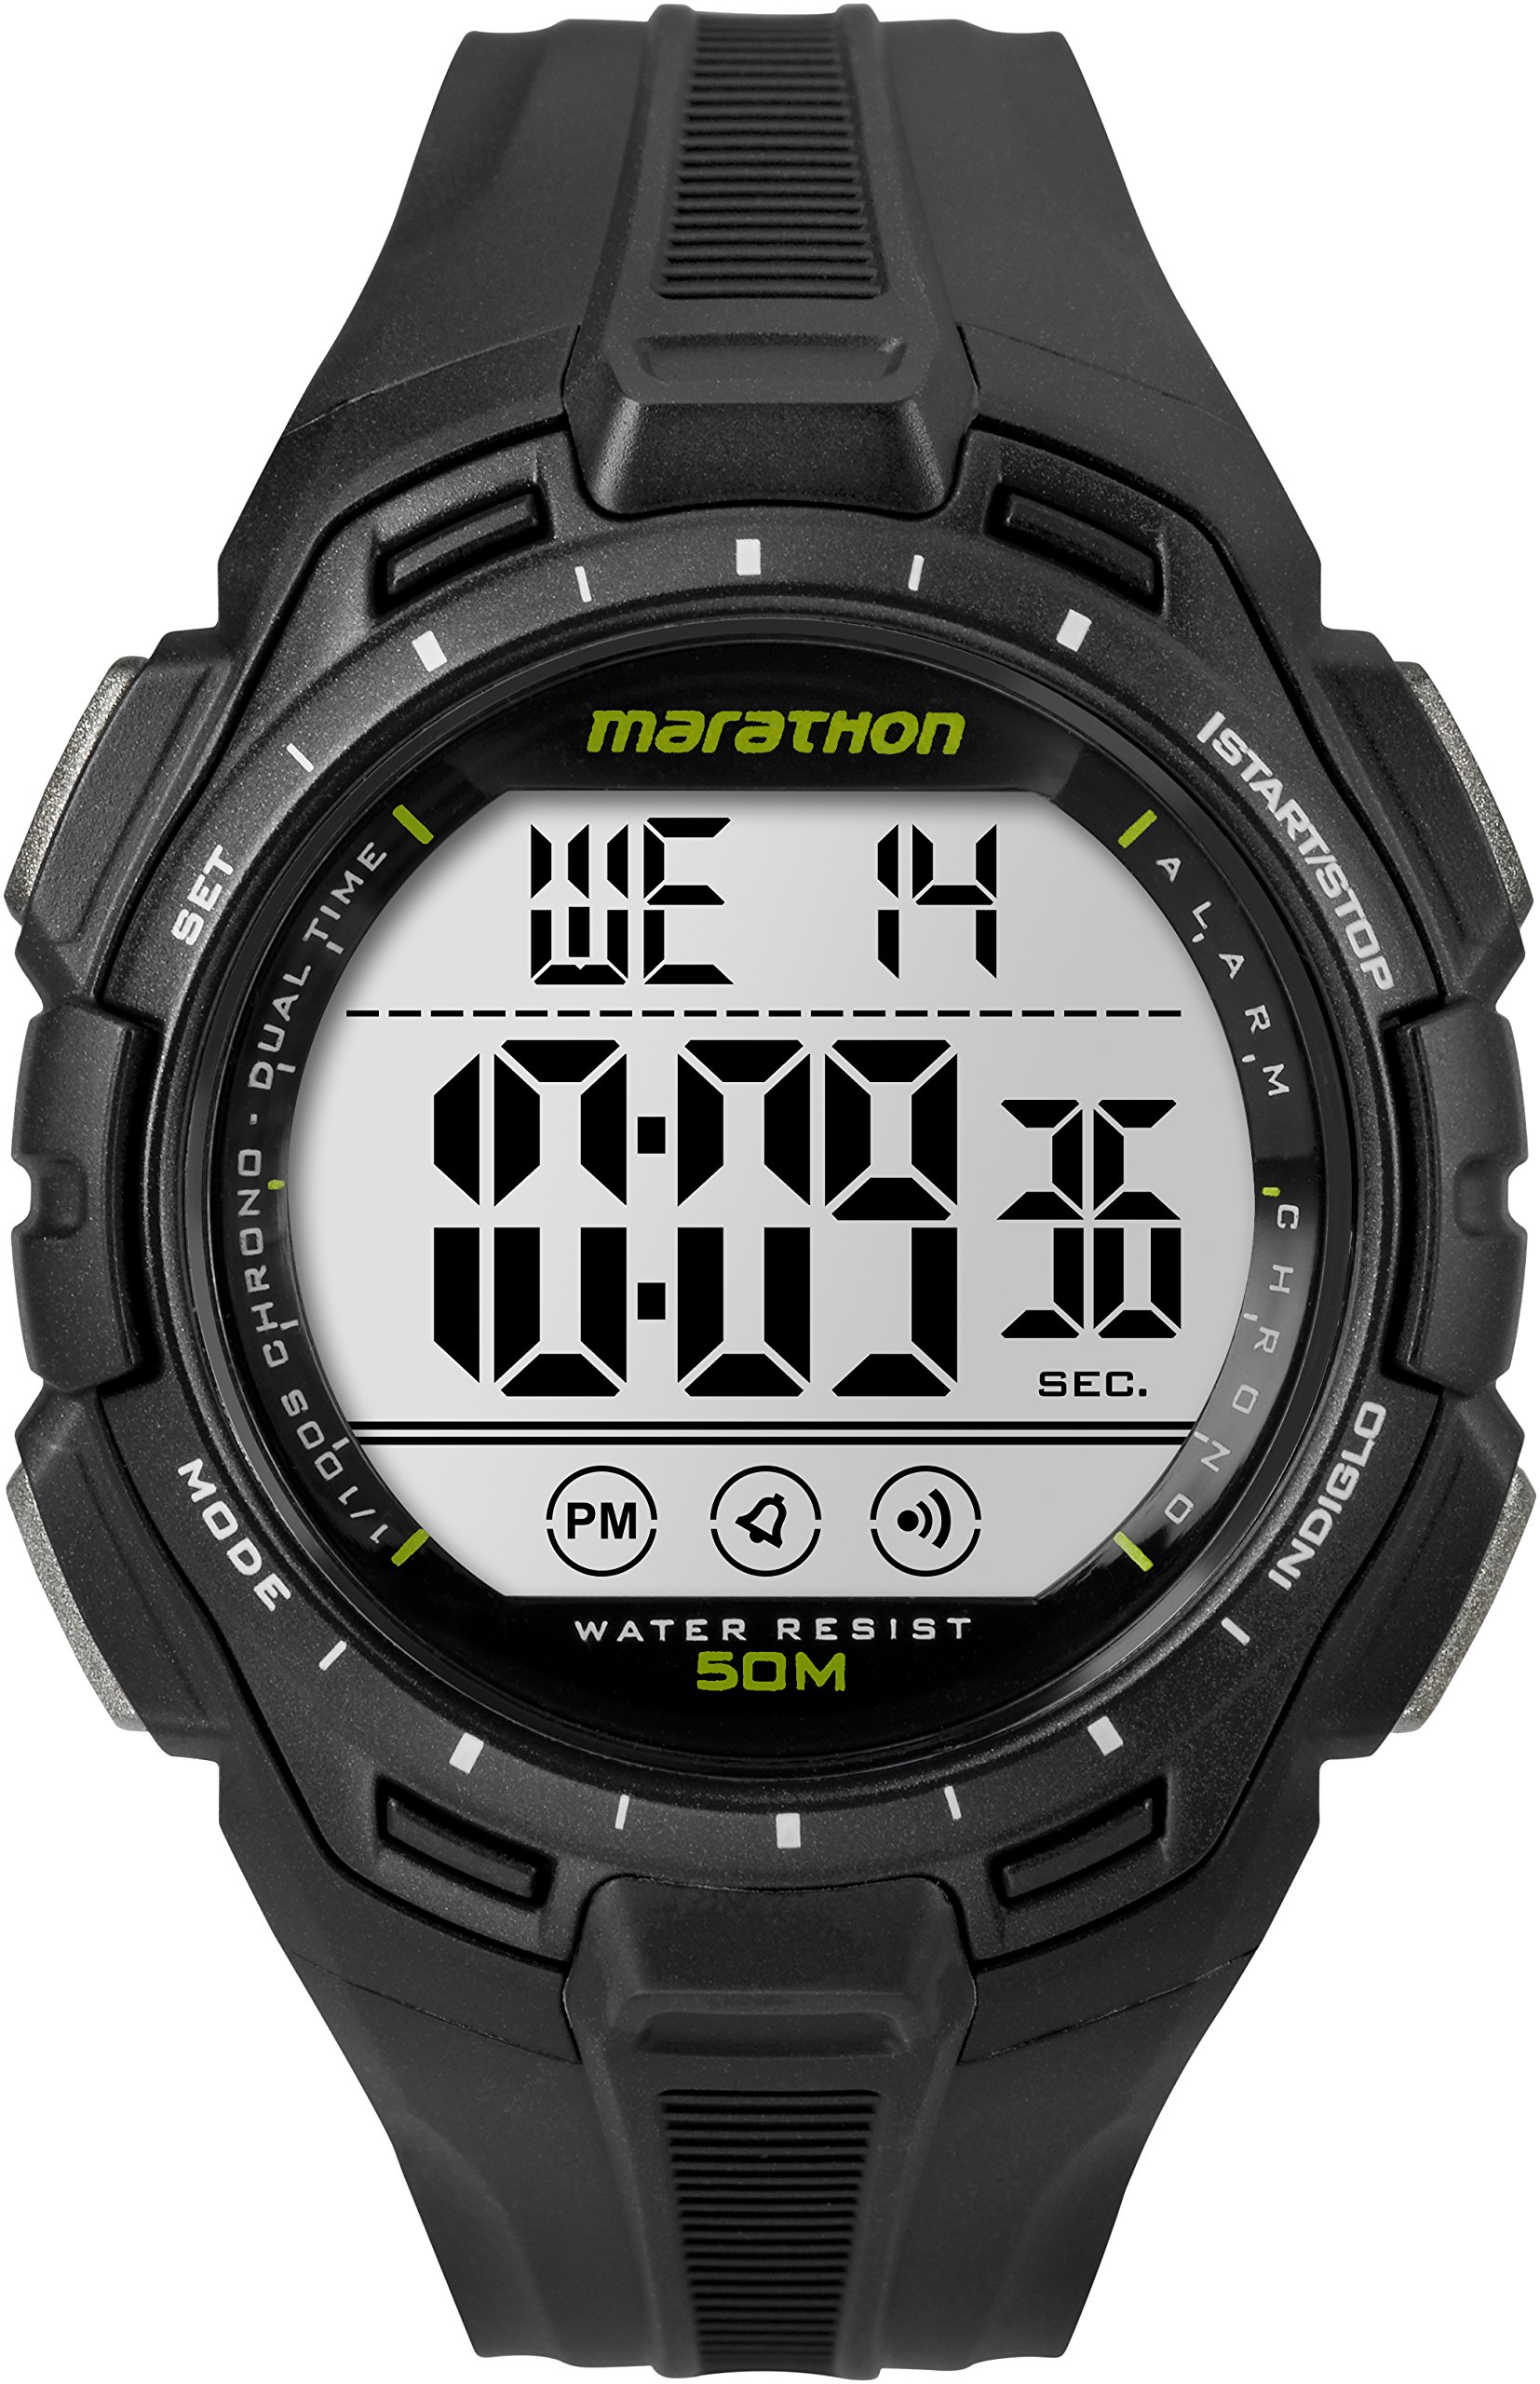 Marathon by Timex Full-Size Watch